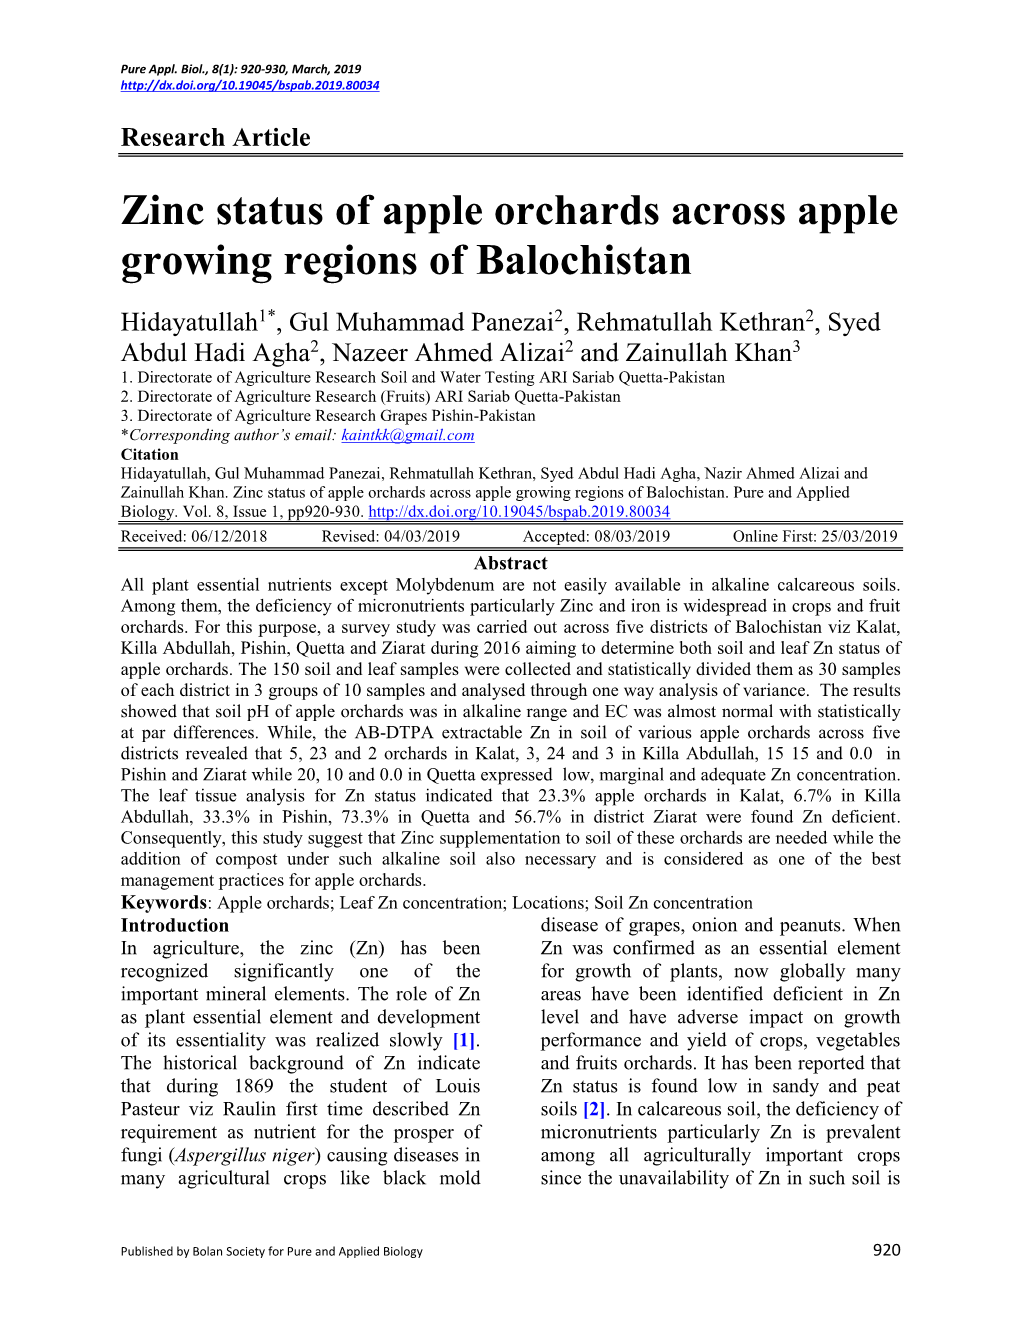 Zinc Status of Apple Orchards Across Apple Growing Regions of Balochistan